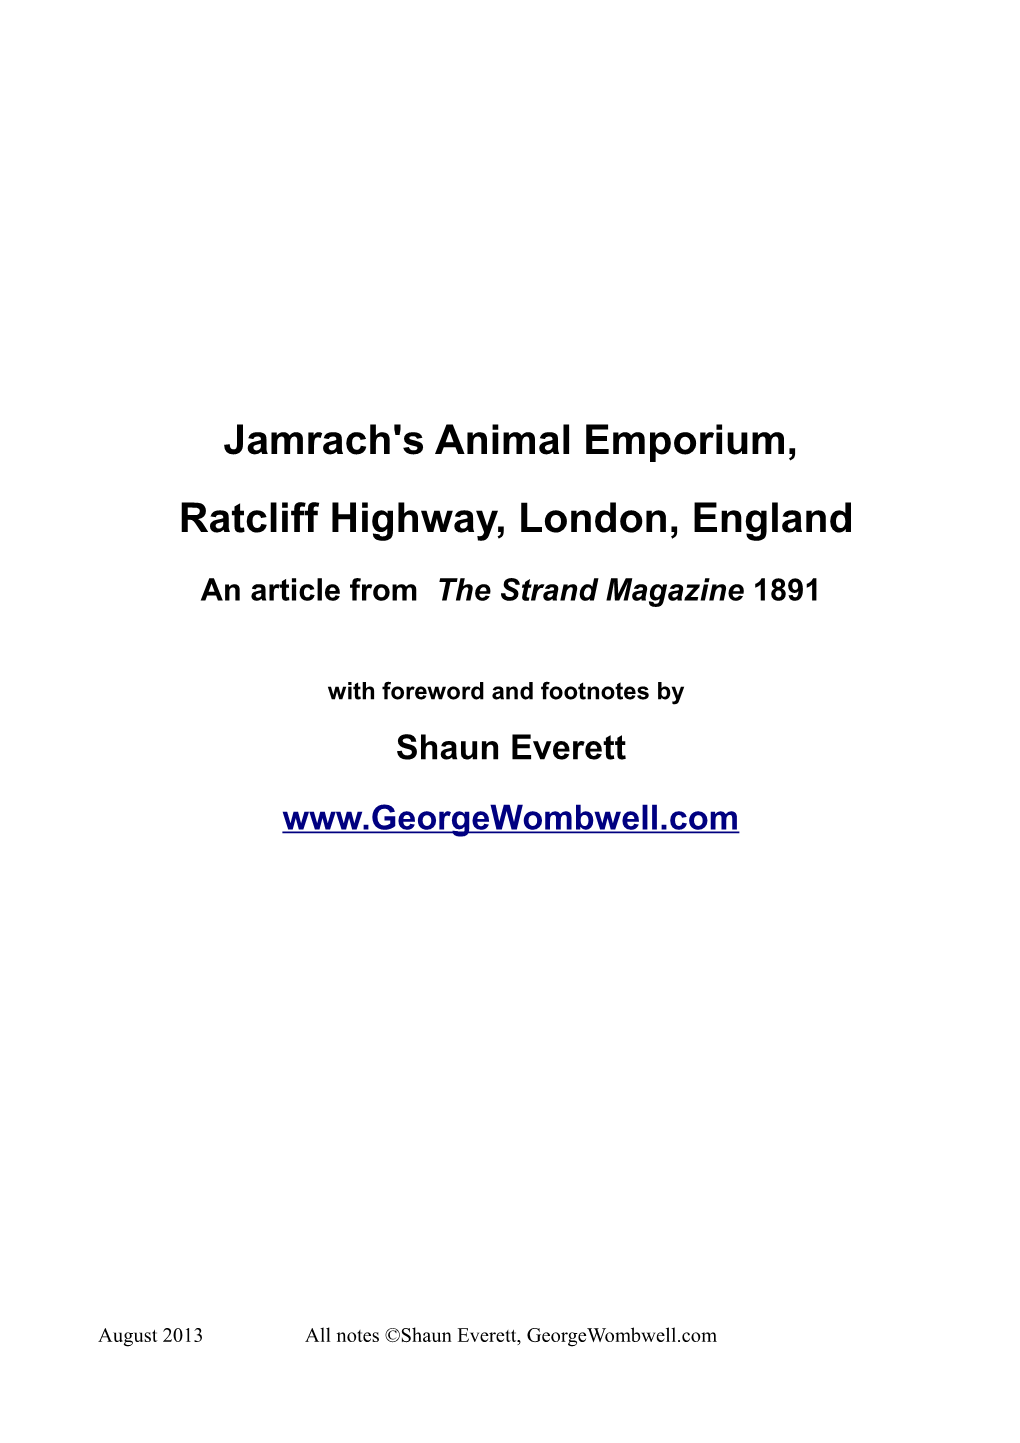 Jamrach's Animal Emporium, Ratcliff Highway, London, England